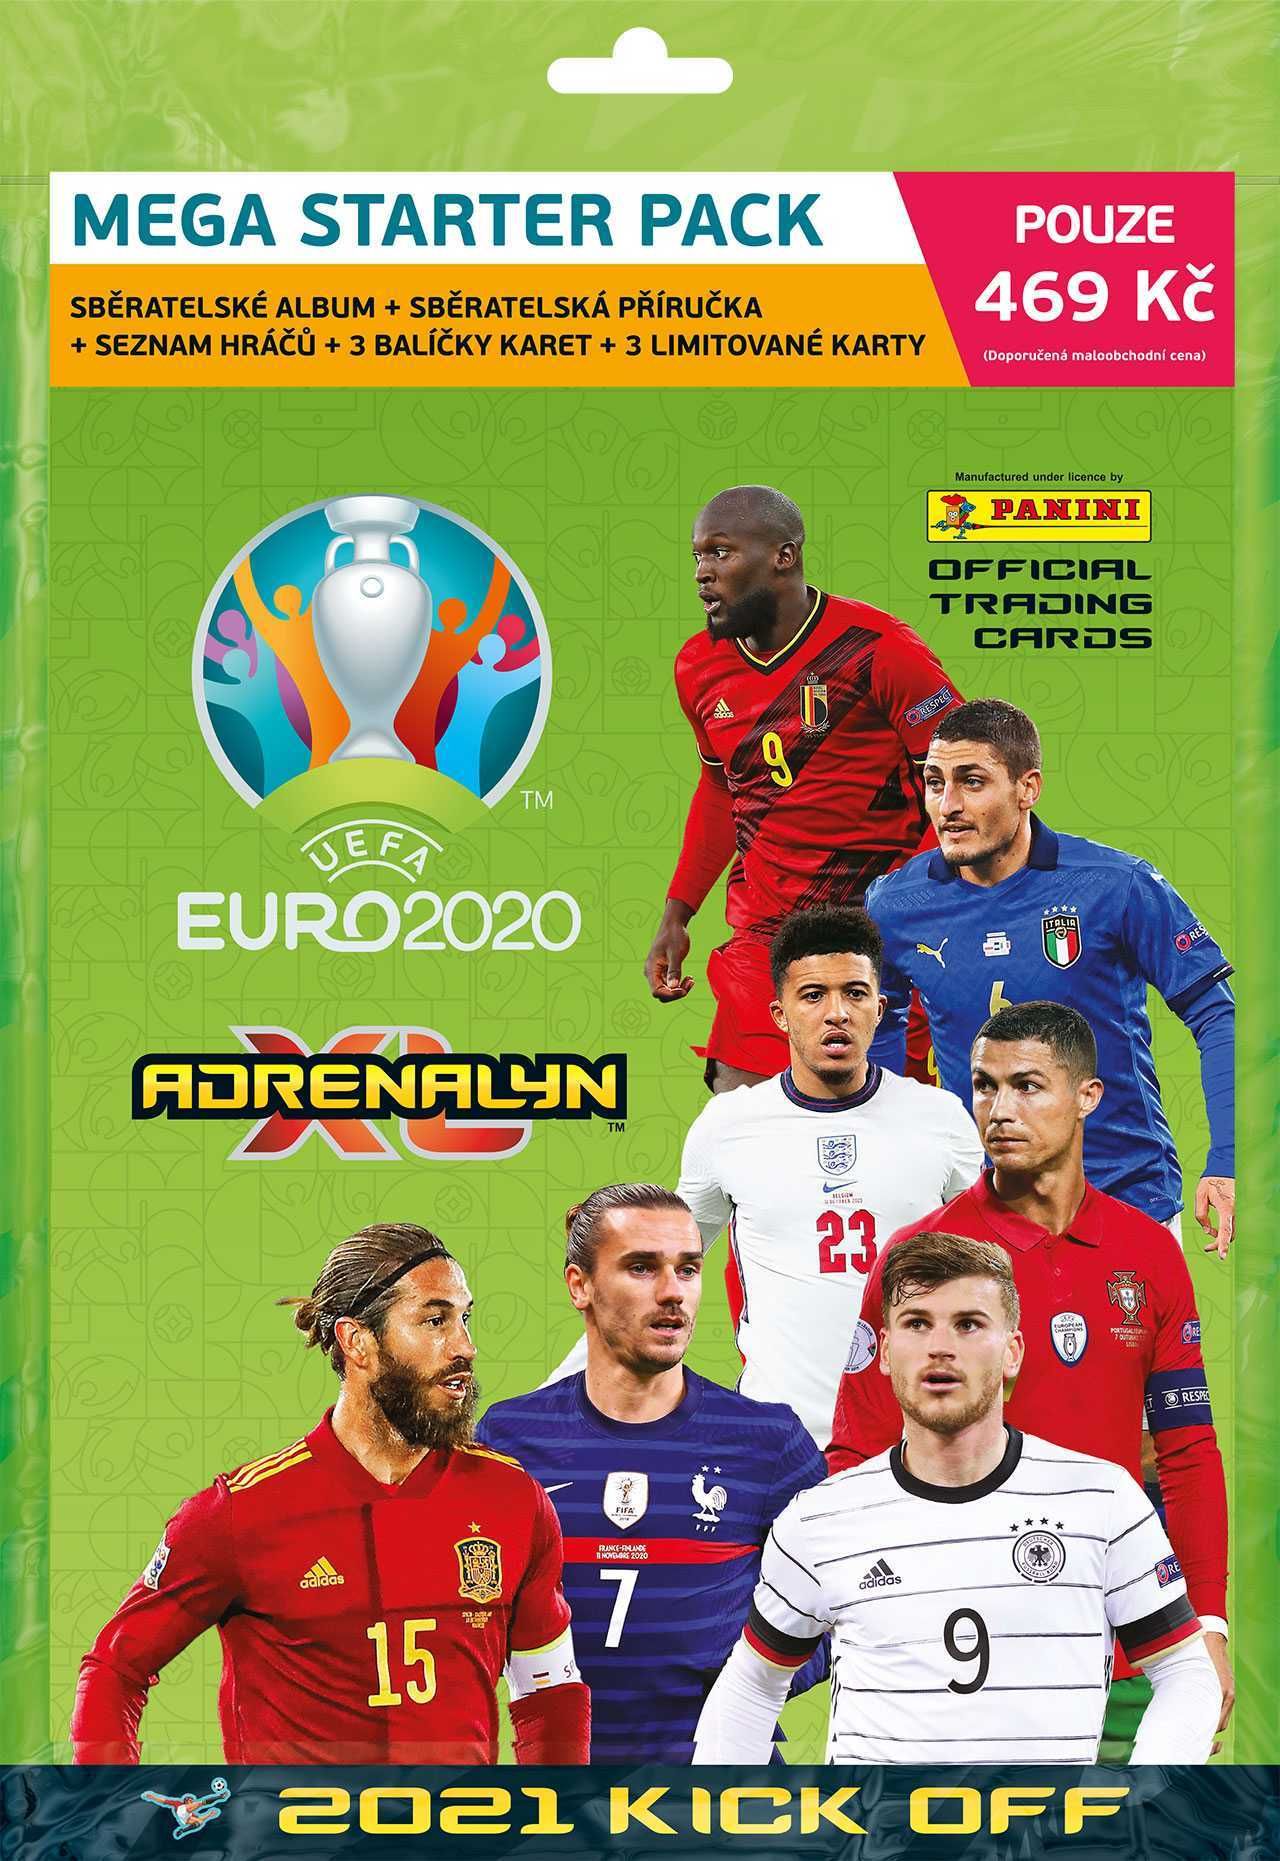 PANINI EURO 2020 ADRENALYN - 2021 KICK OFF - starter set - obrázek 1